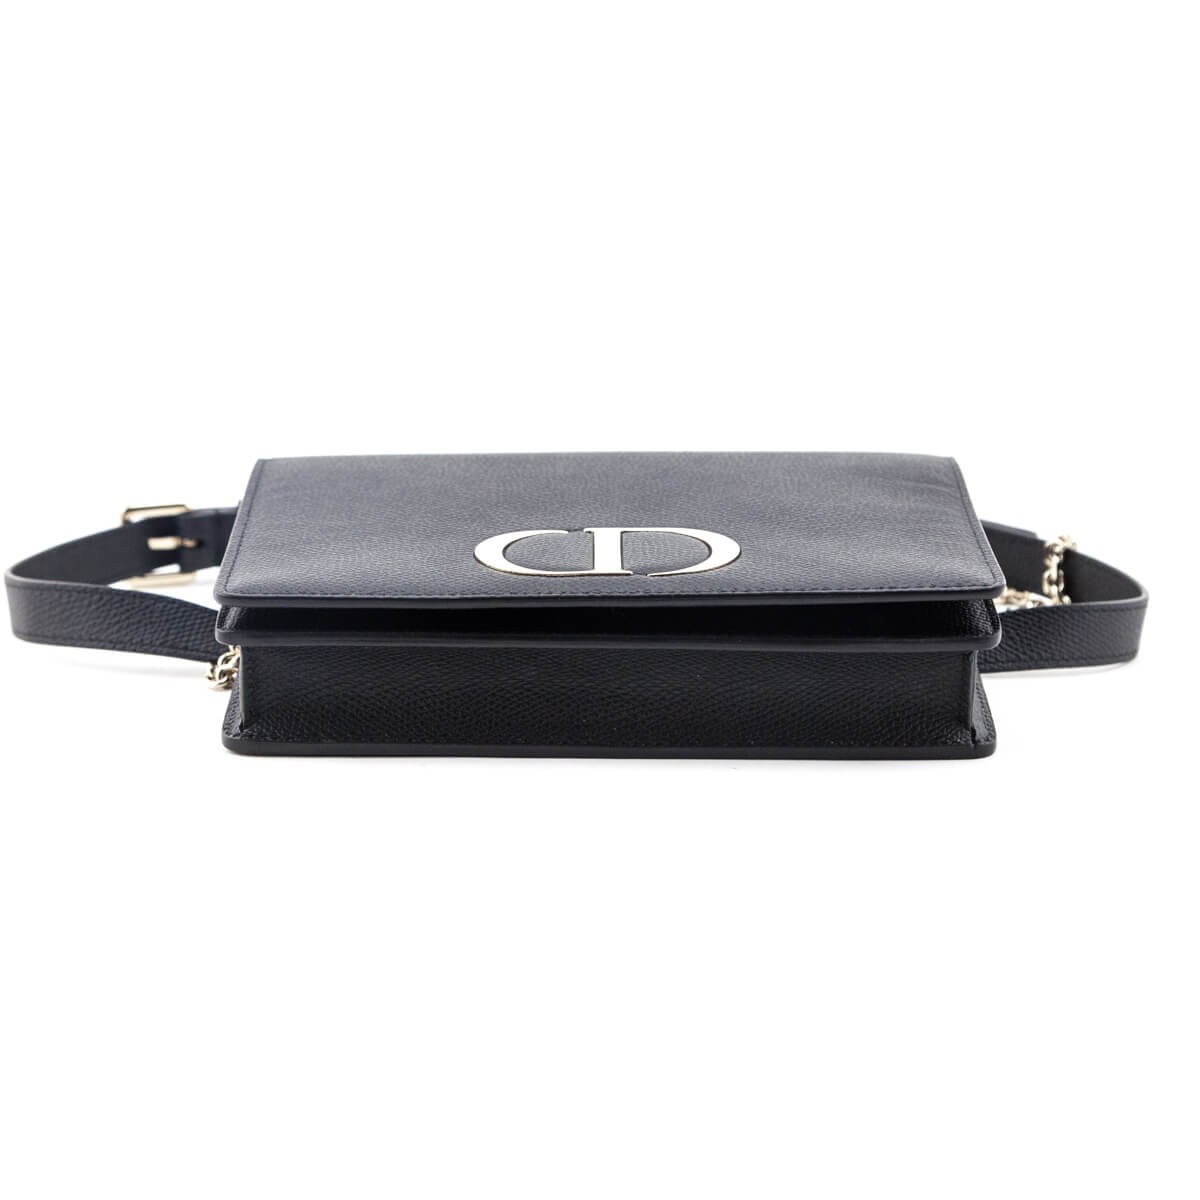 Dior Small 30 Montaigne Bag Black - THE PURSE AFFAIR